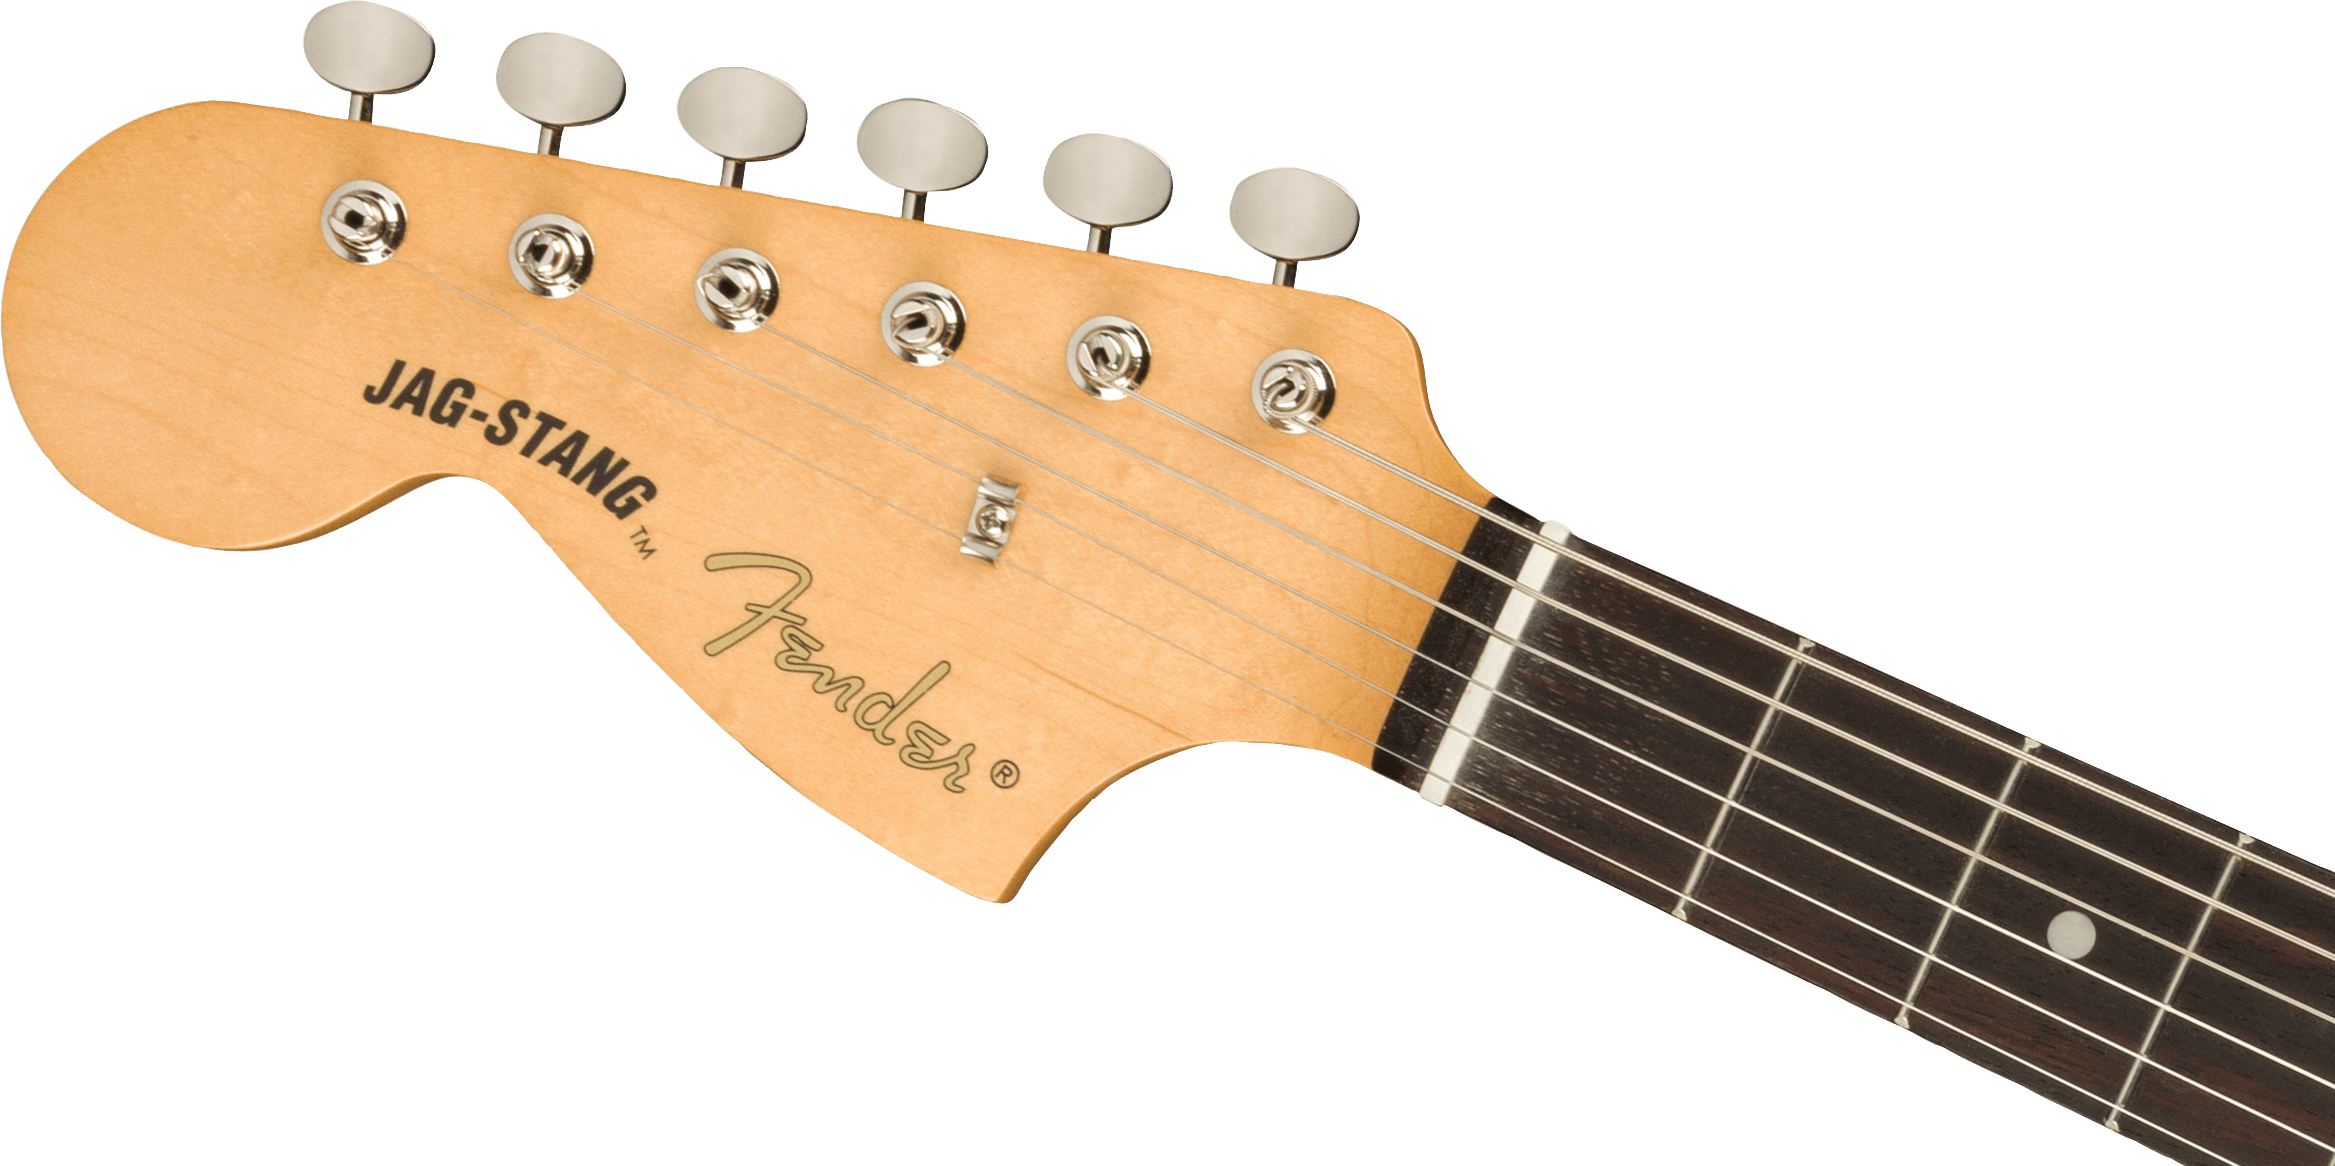 Fender Jag-stang Kurt Cobain Artist Gaucher Hs Trem Rw - Sonic Blue - Guitarra electrica para zurdos - Variation 4